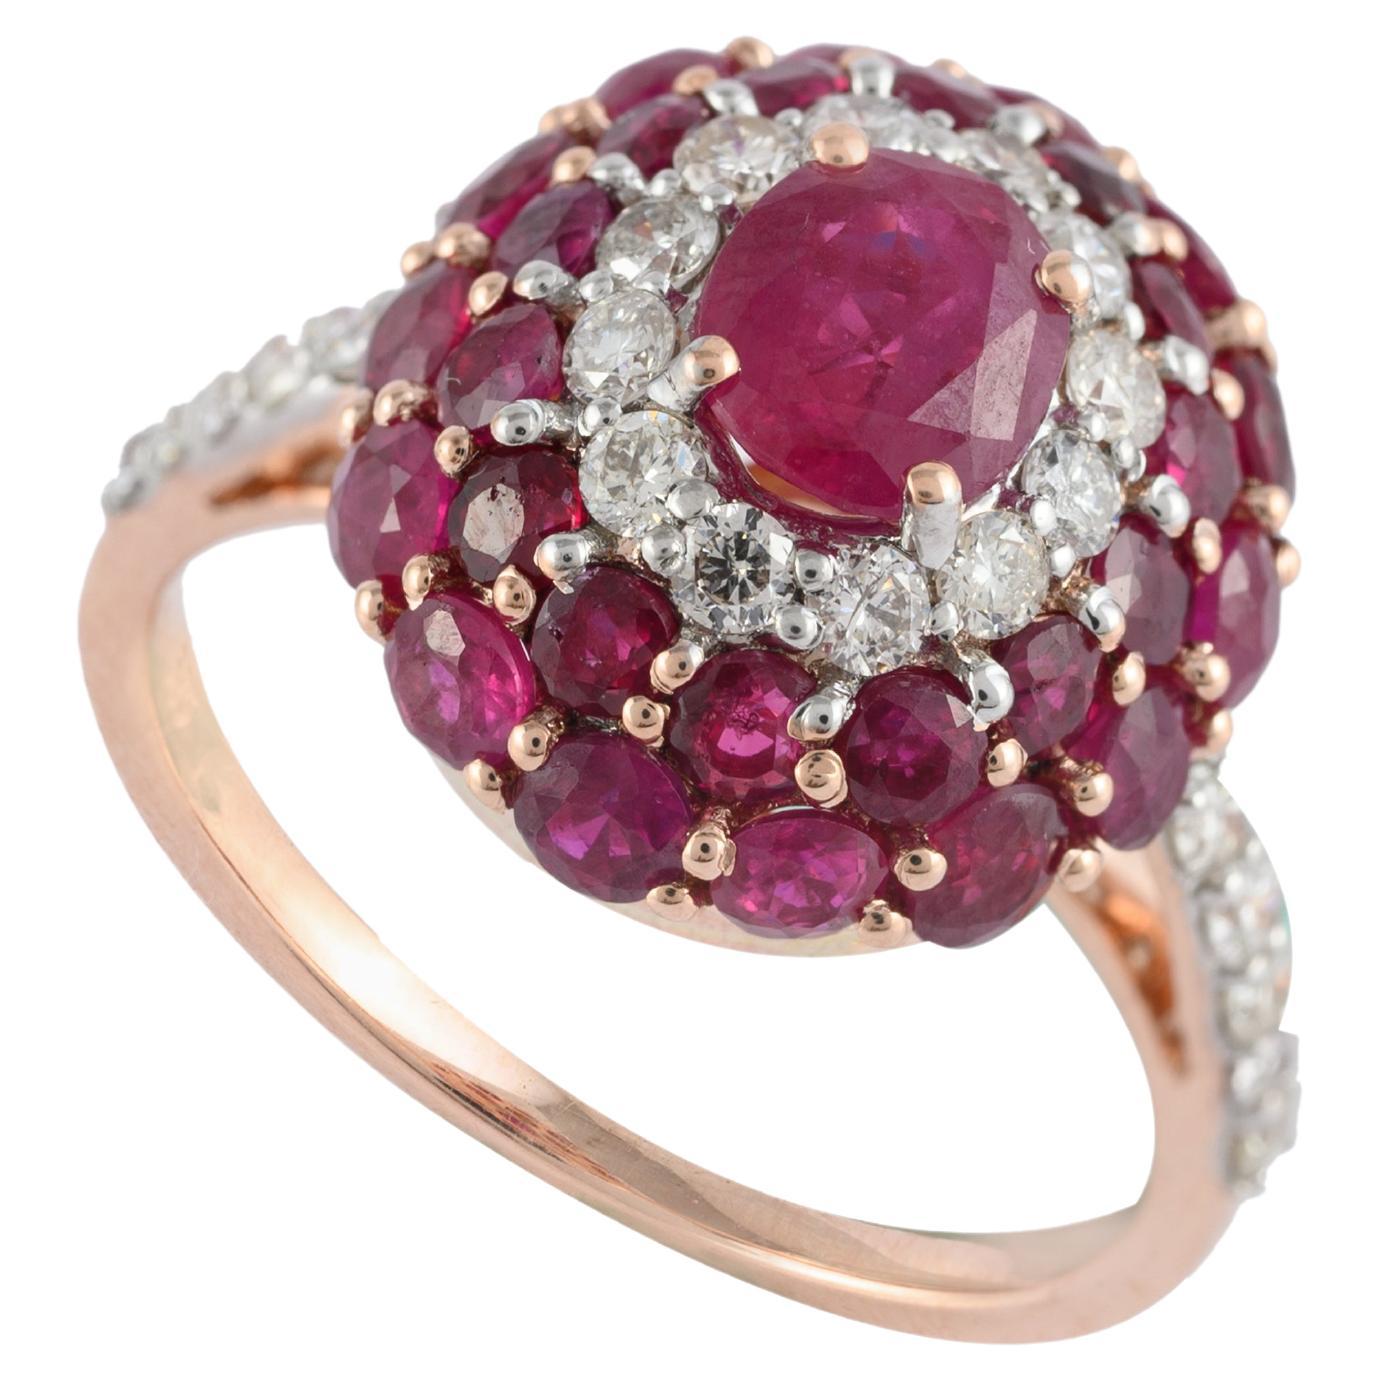 En vente :  Bague en or rose massif 14 carats avec diamants et grappe de rubis naturels de 2,76 carats